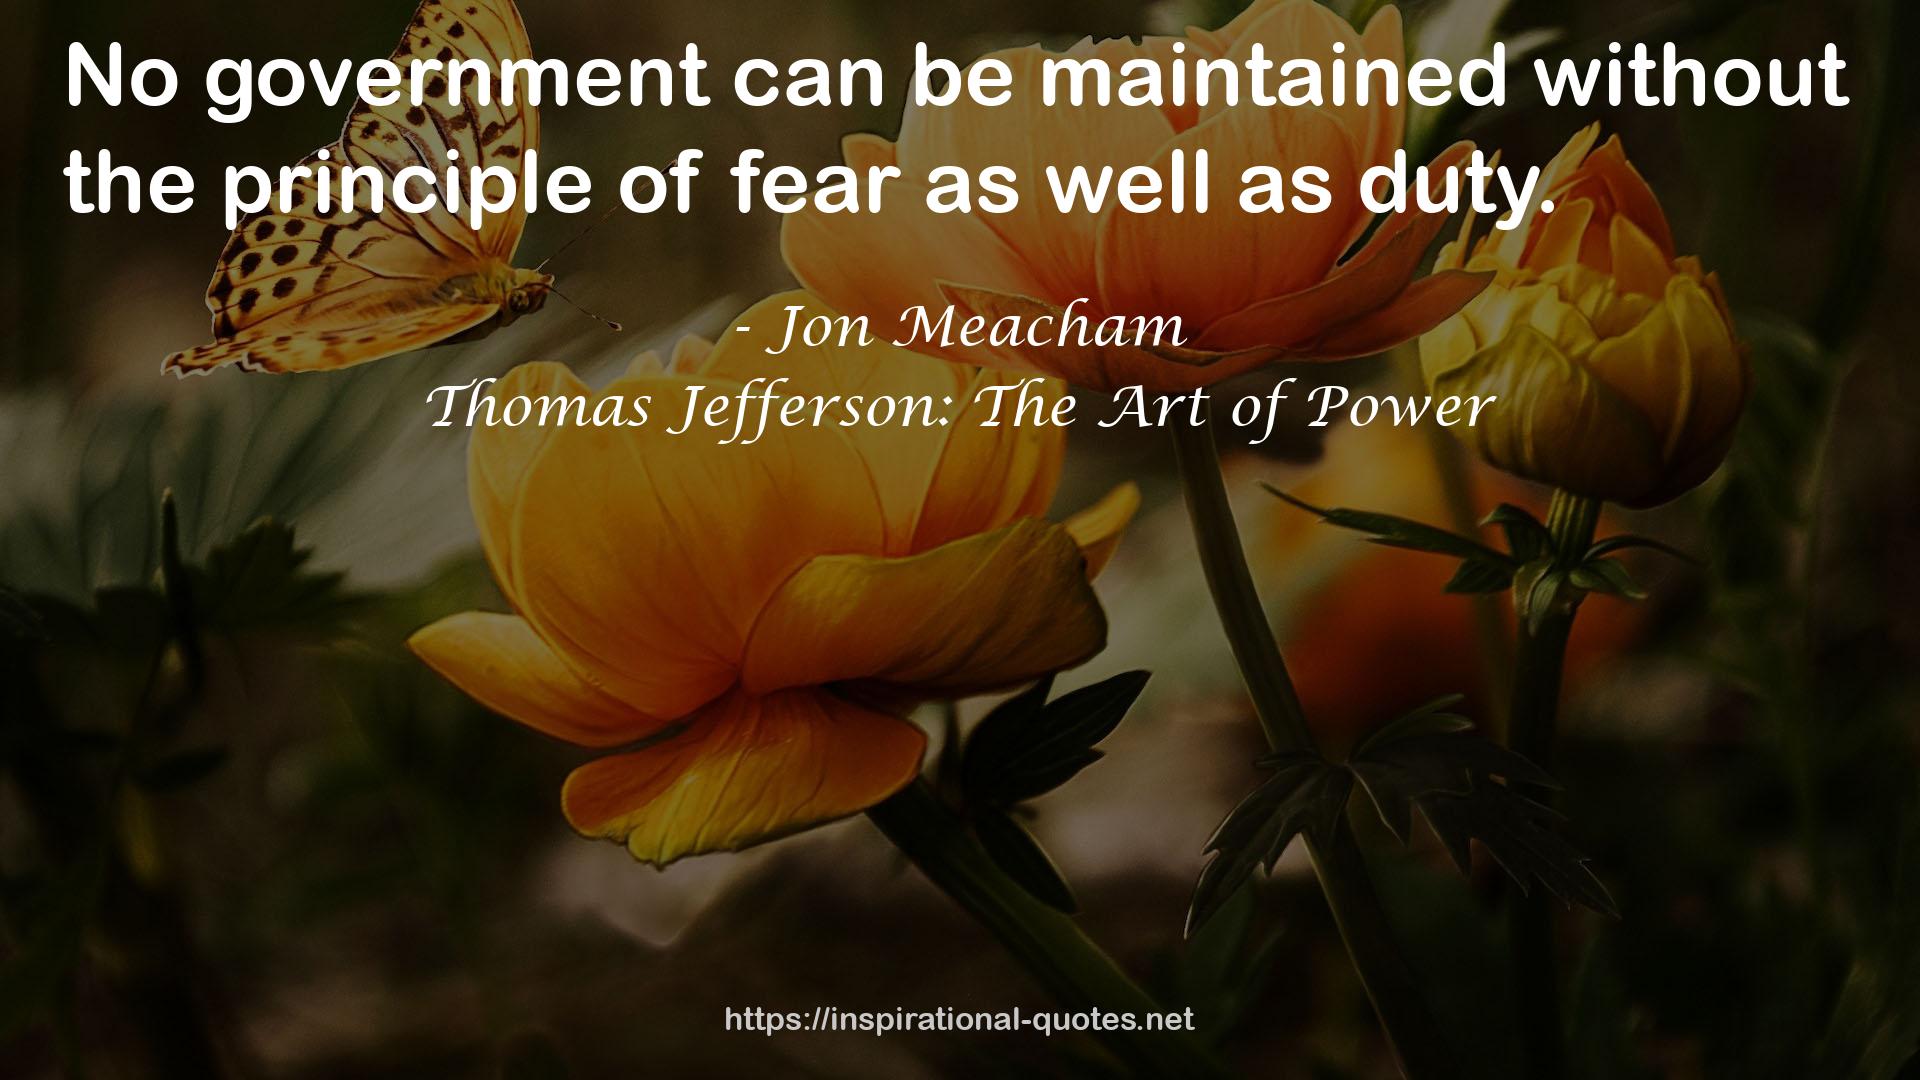 Thomas Jefferson: The Art of Power QUOTES